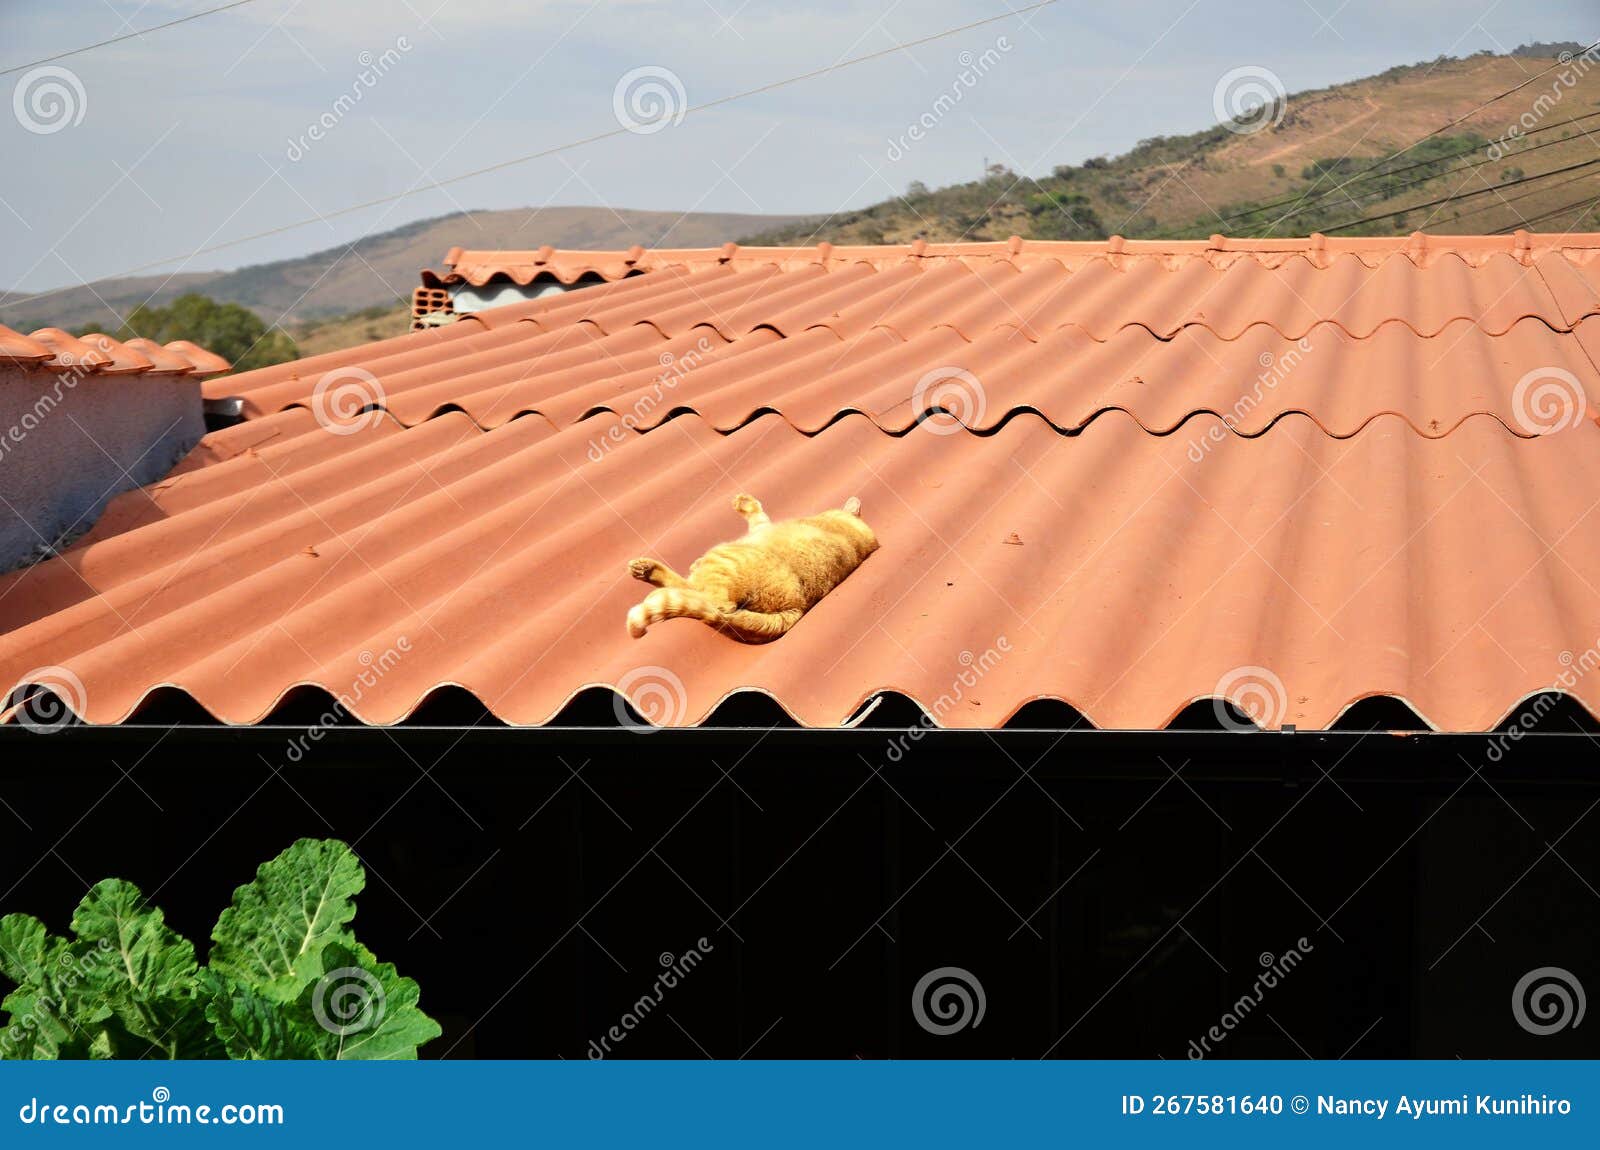 in the sun on top of the roof an orange felis catus sleeping